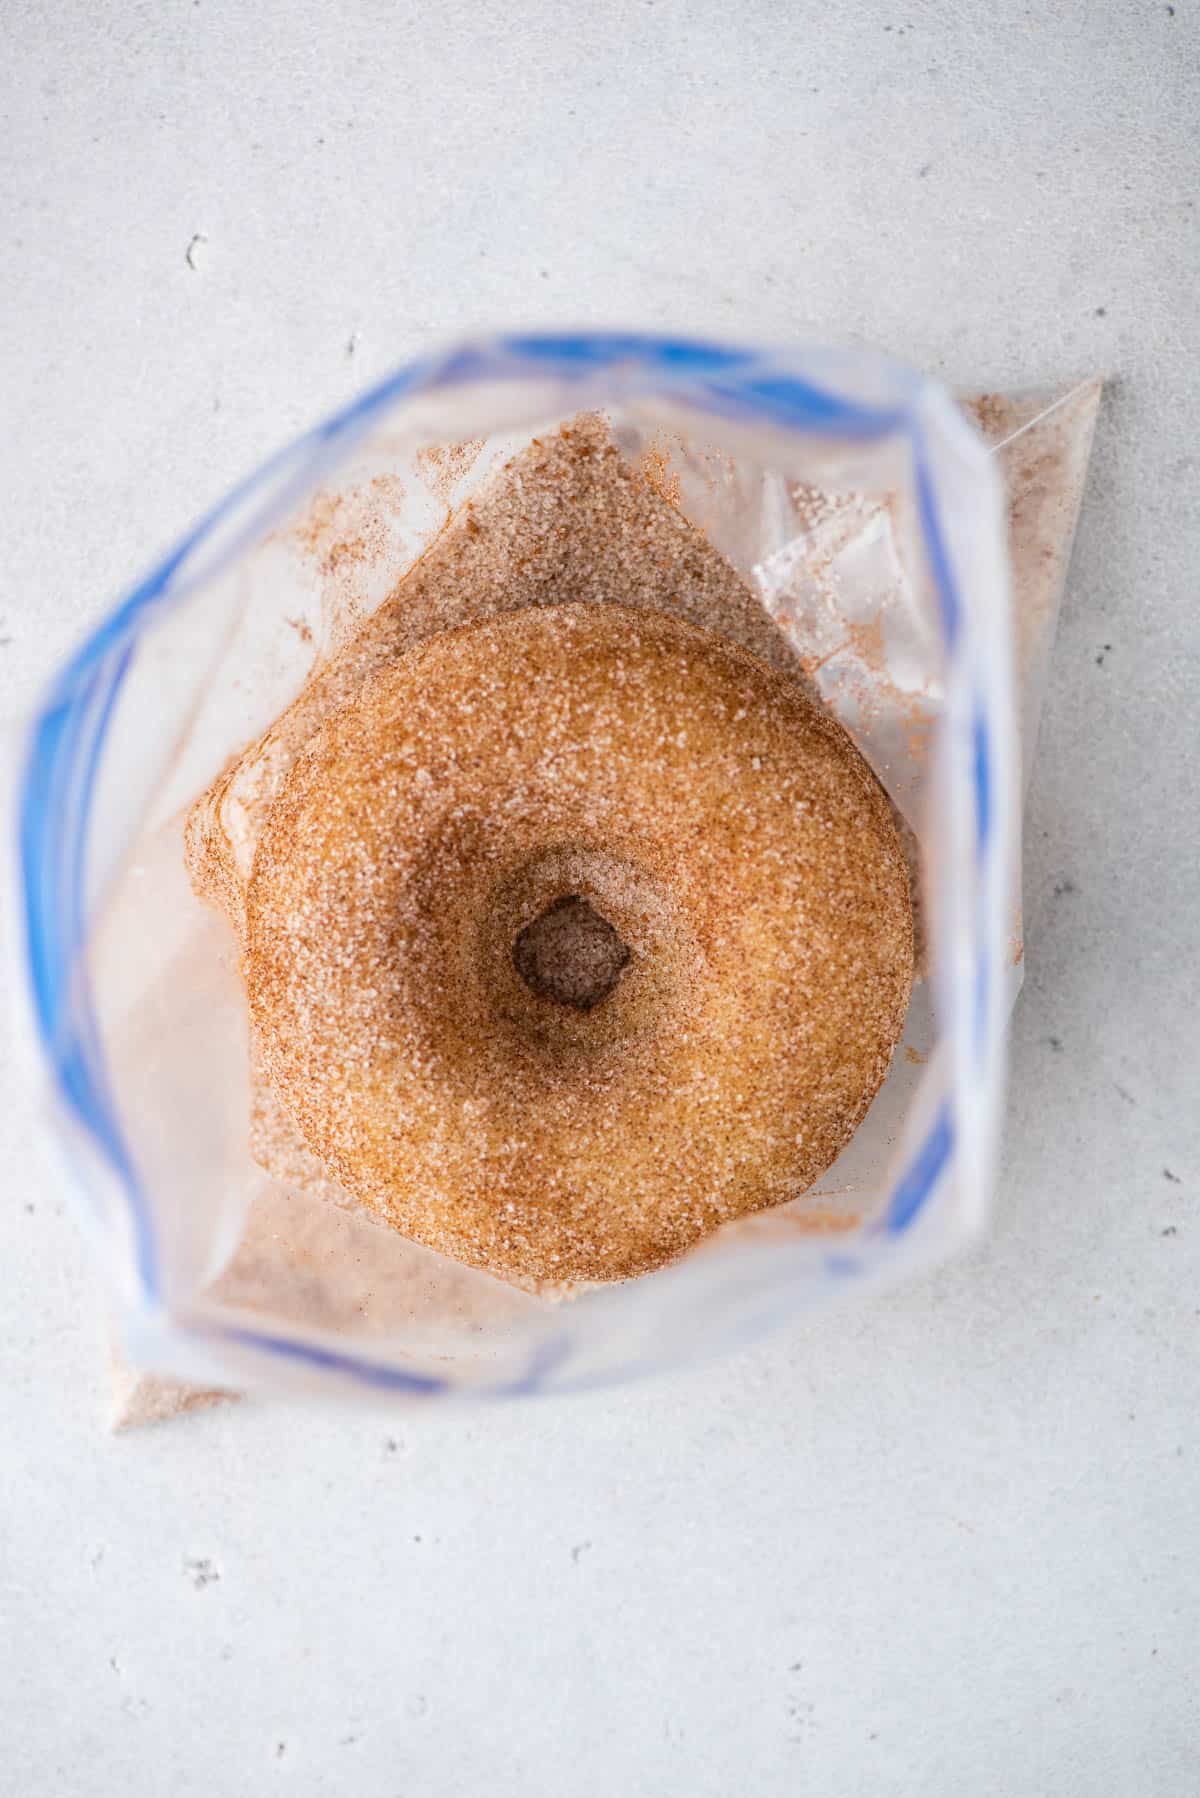 donut in a ziploc bag being coated in a cinnamon sugar mixture